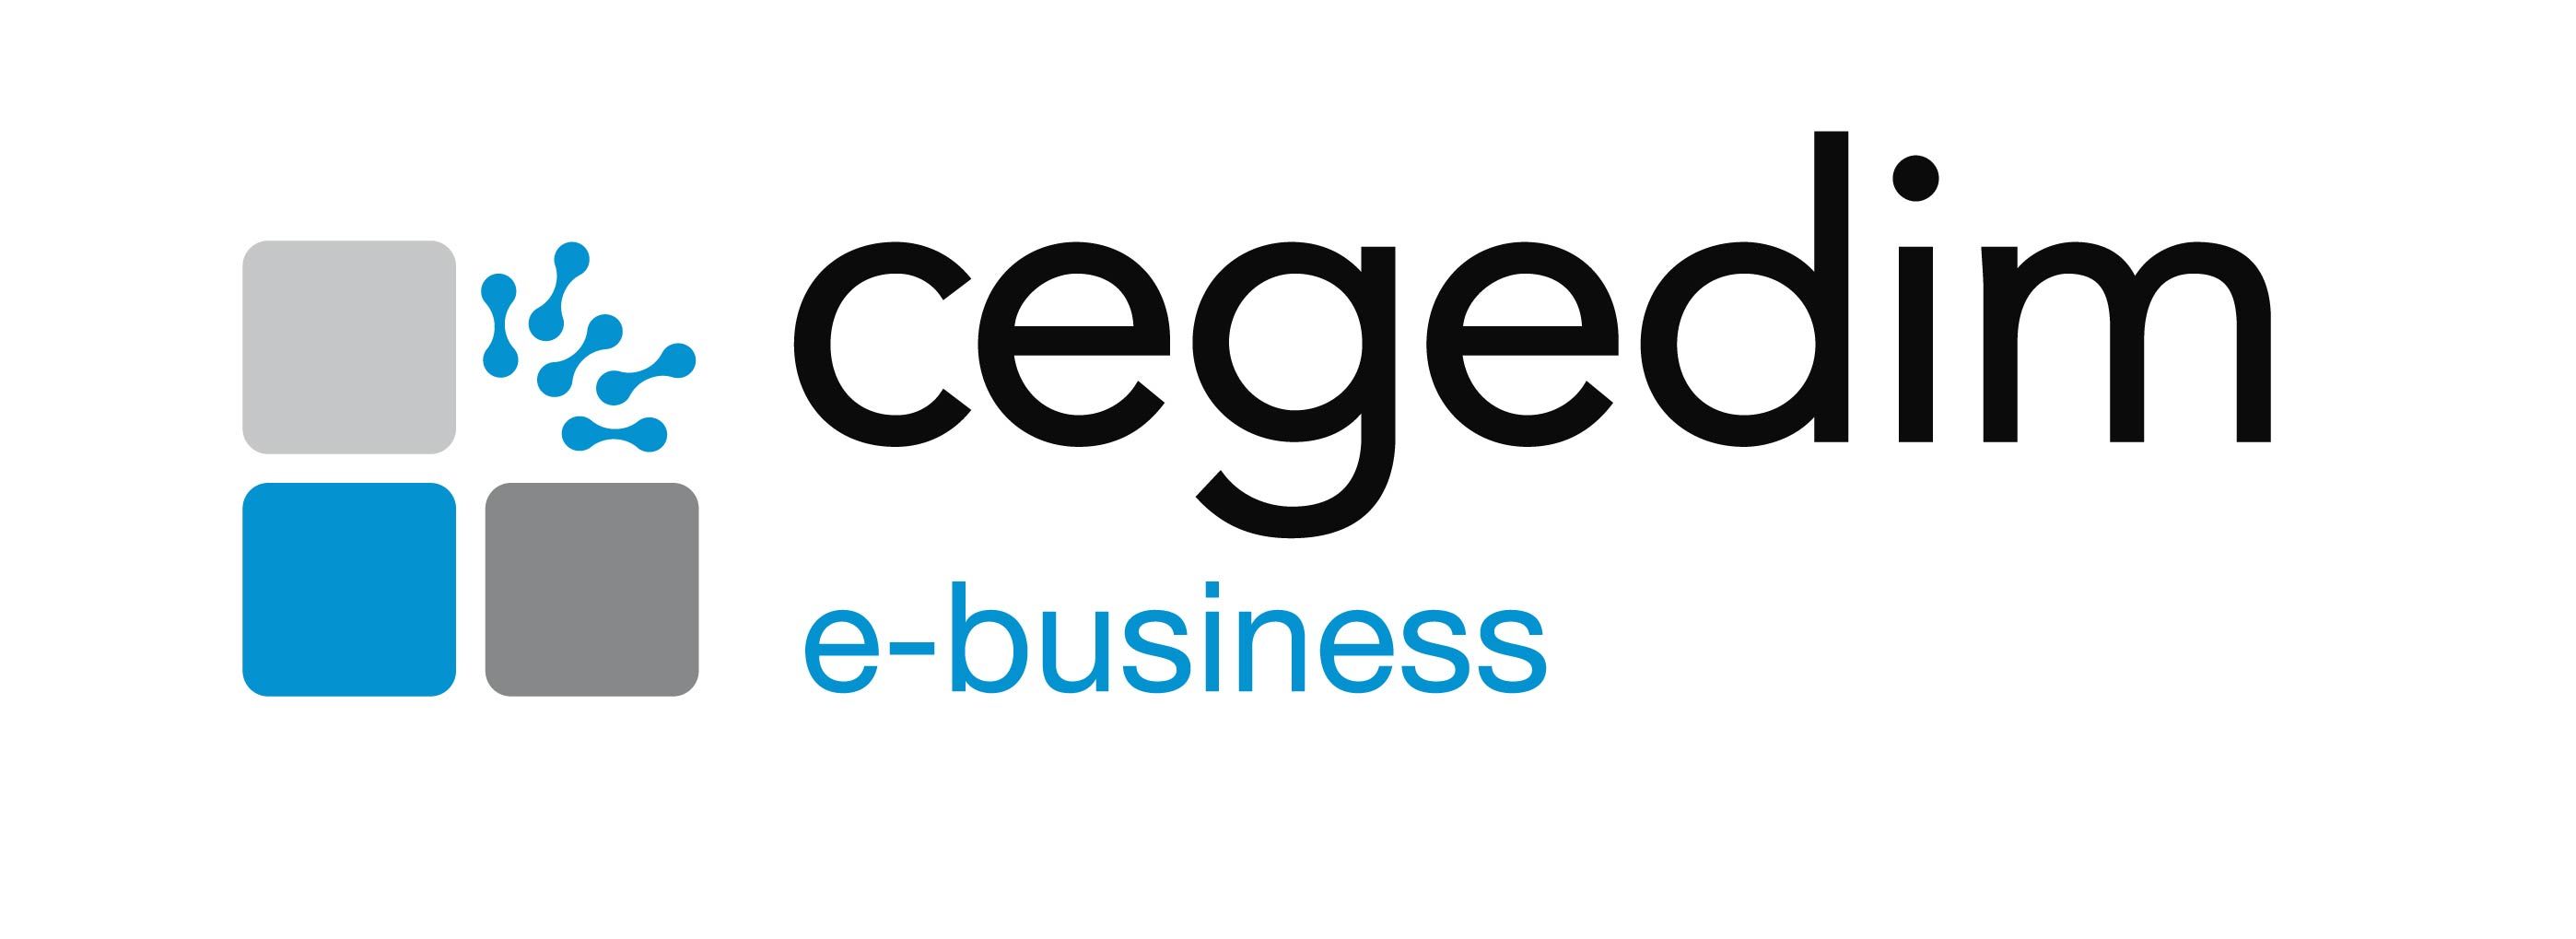 Cegedim e-business Ltd